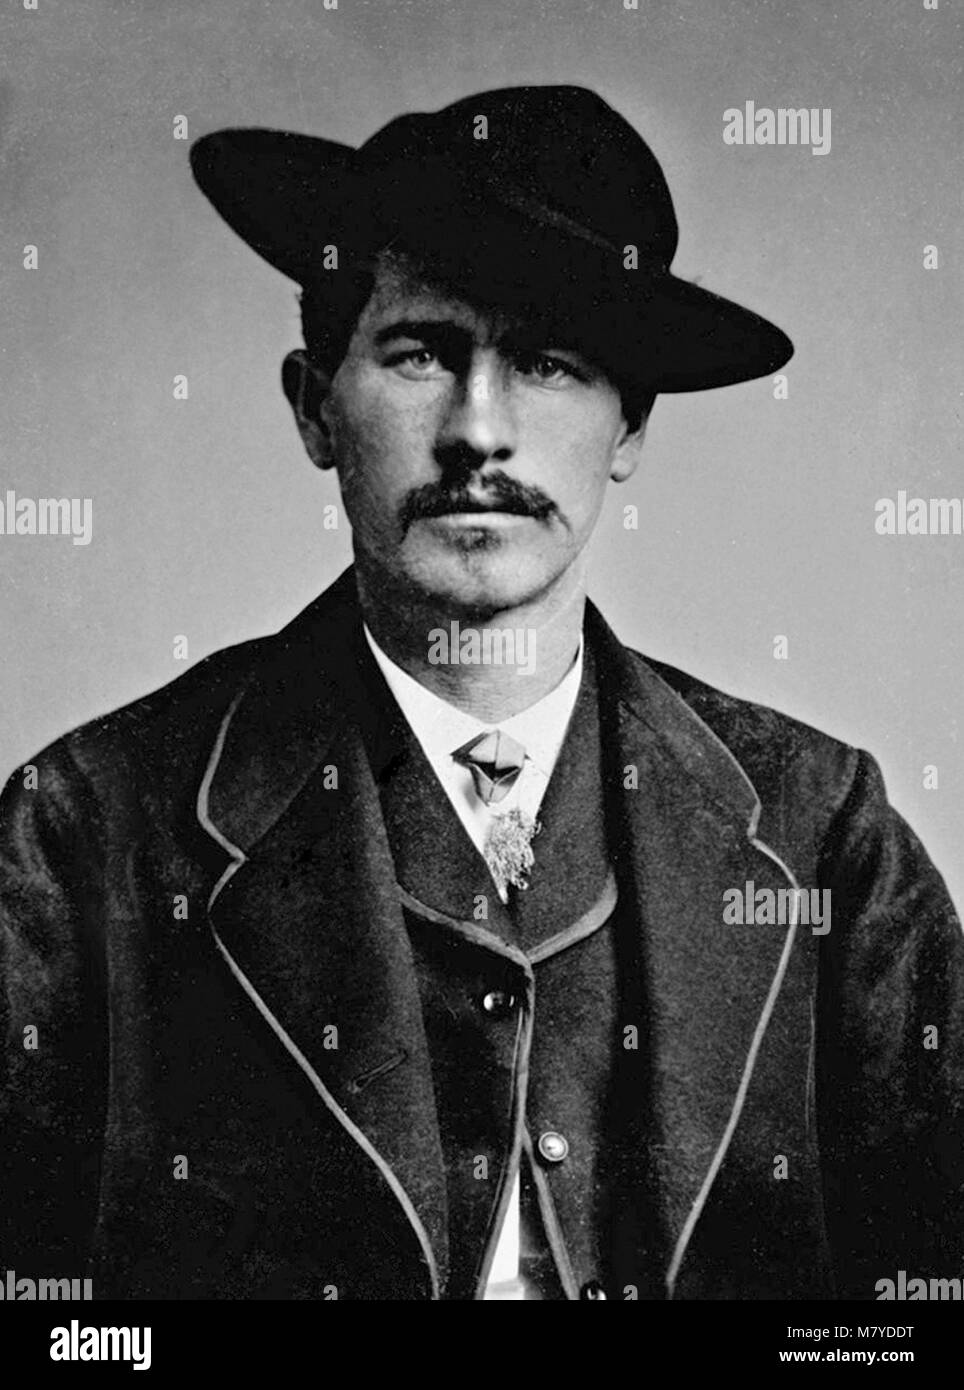 Wyatt Earp (1848-1929). Portrait of the famous American lawman and gambler, c.1870. Stock Photo